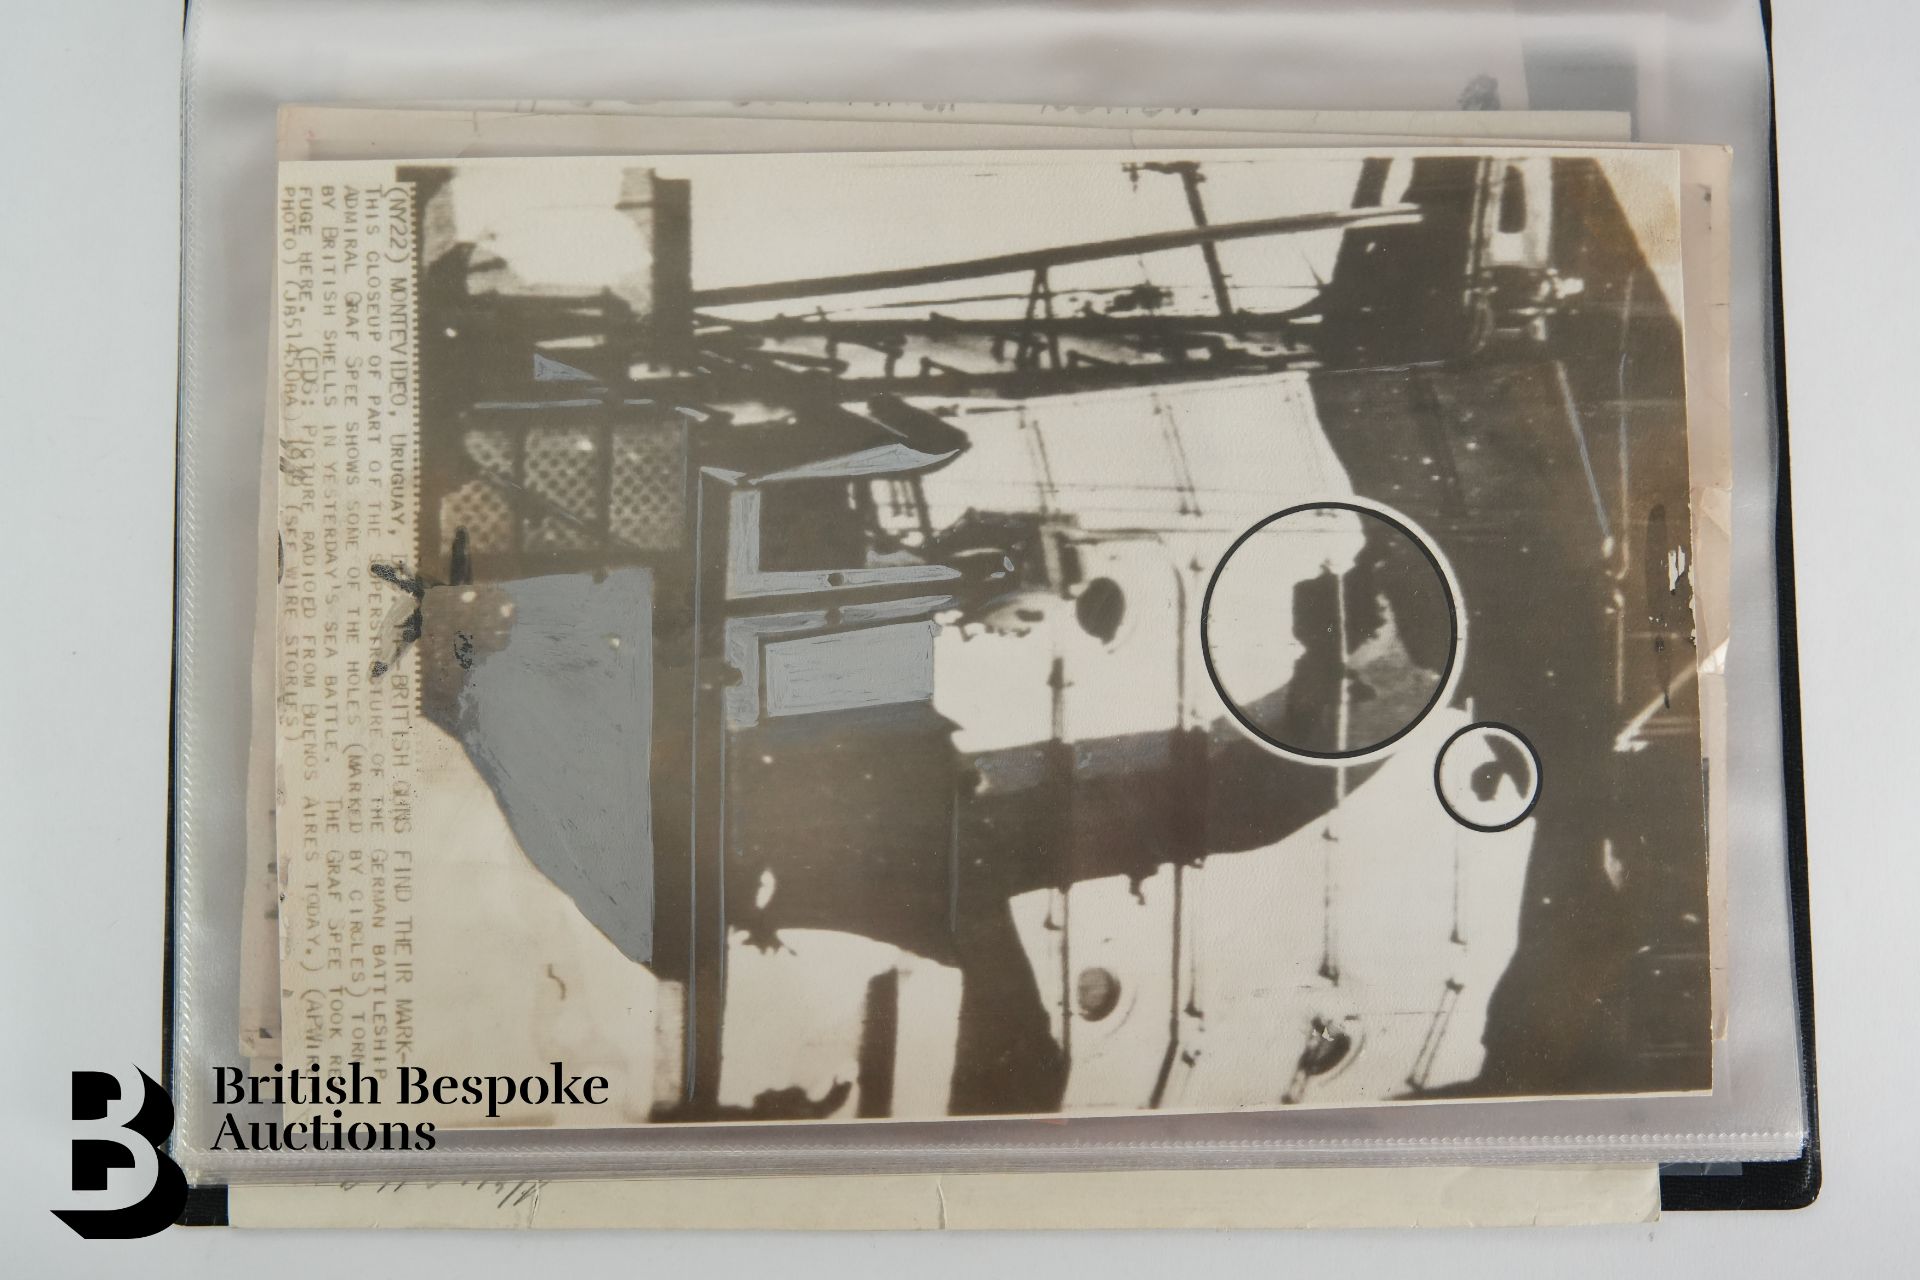 Graf Spee (Pocket Battleship) Interest, incl. Photographs, Documents, Miscellanea - Image 27 of 126